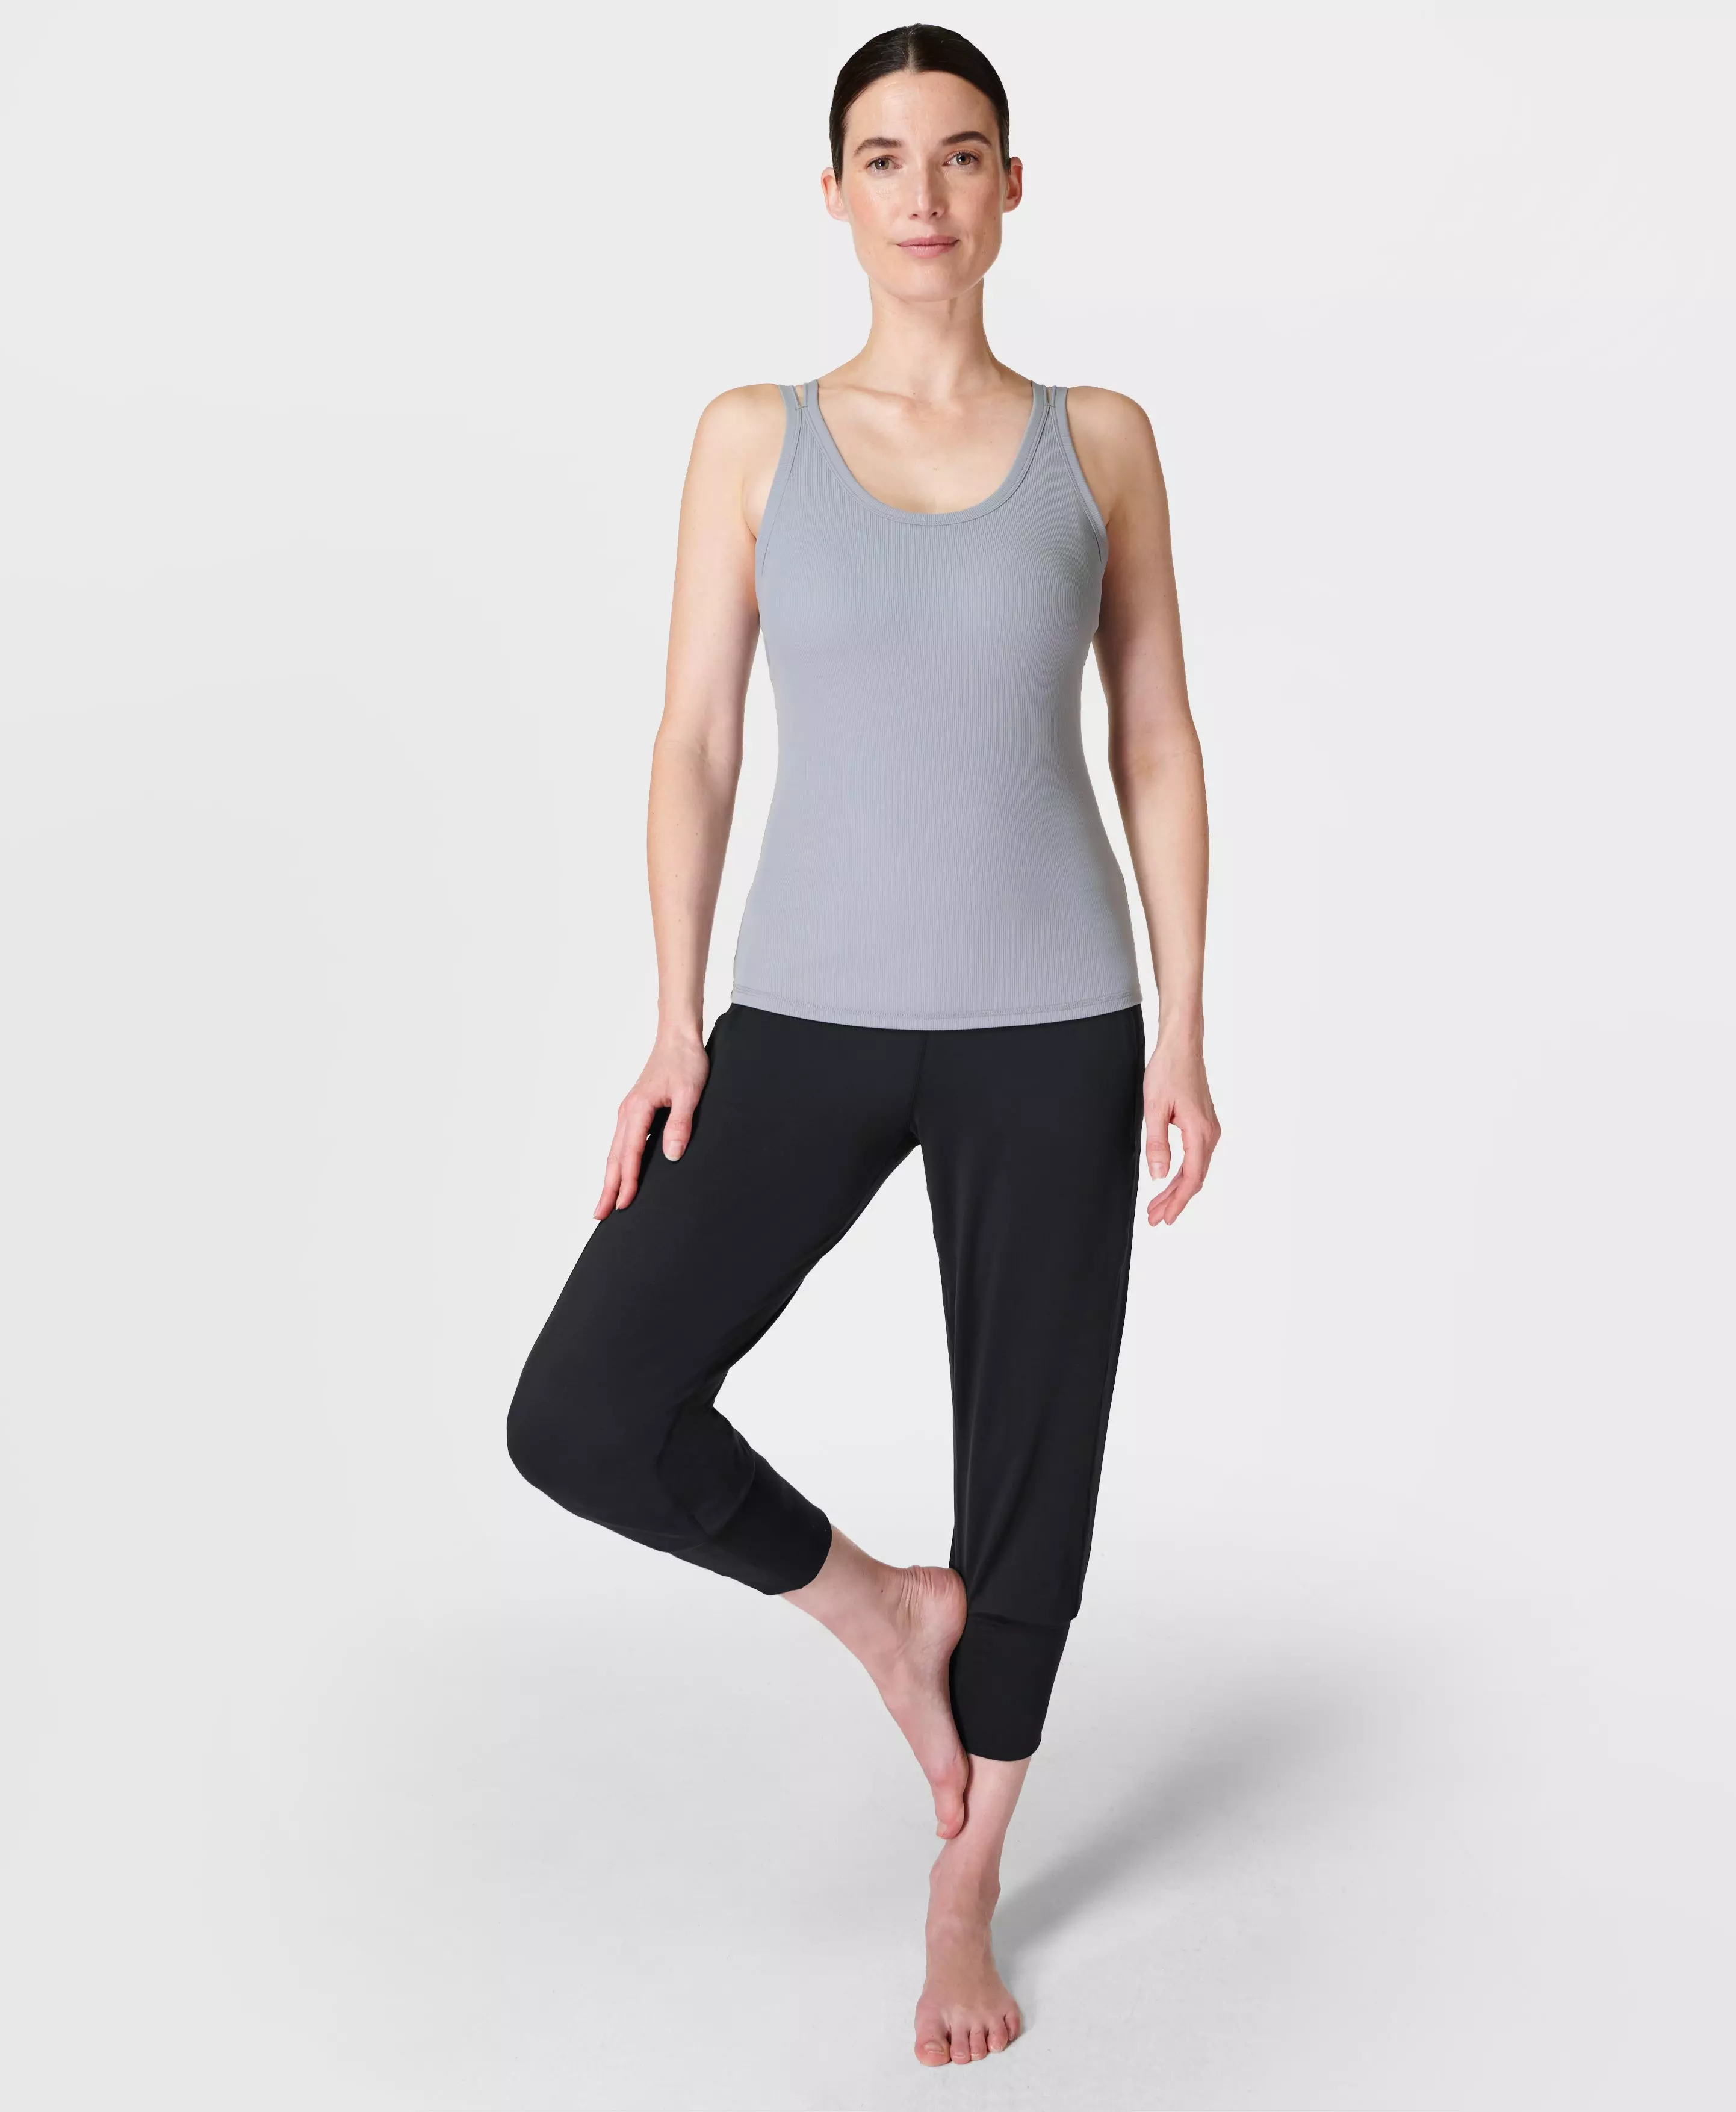 Women's Yoga Pants, Running & Gym Leggings